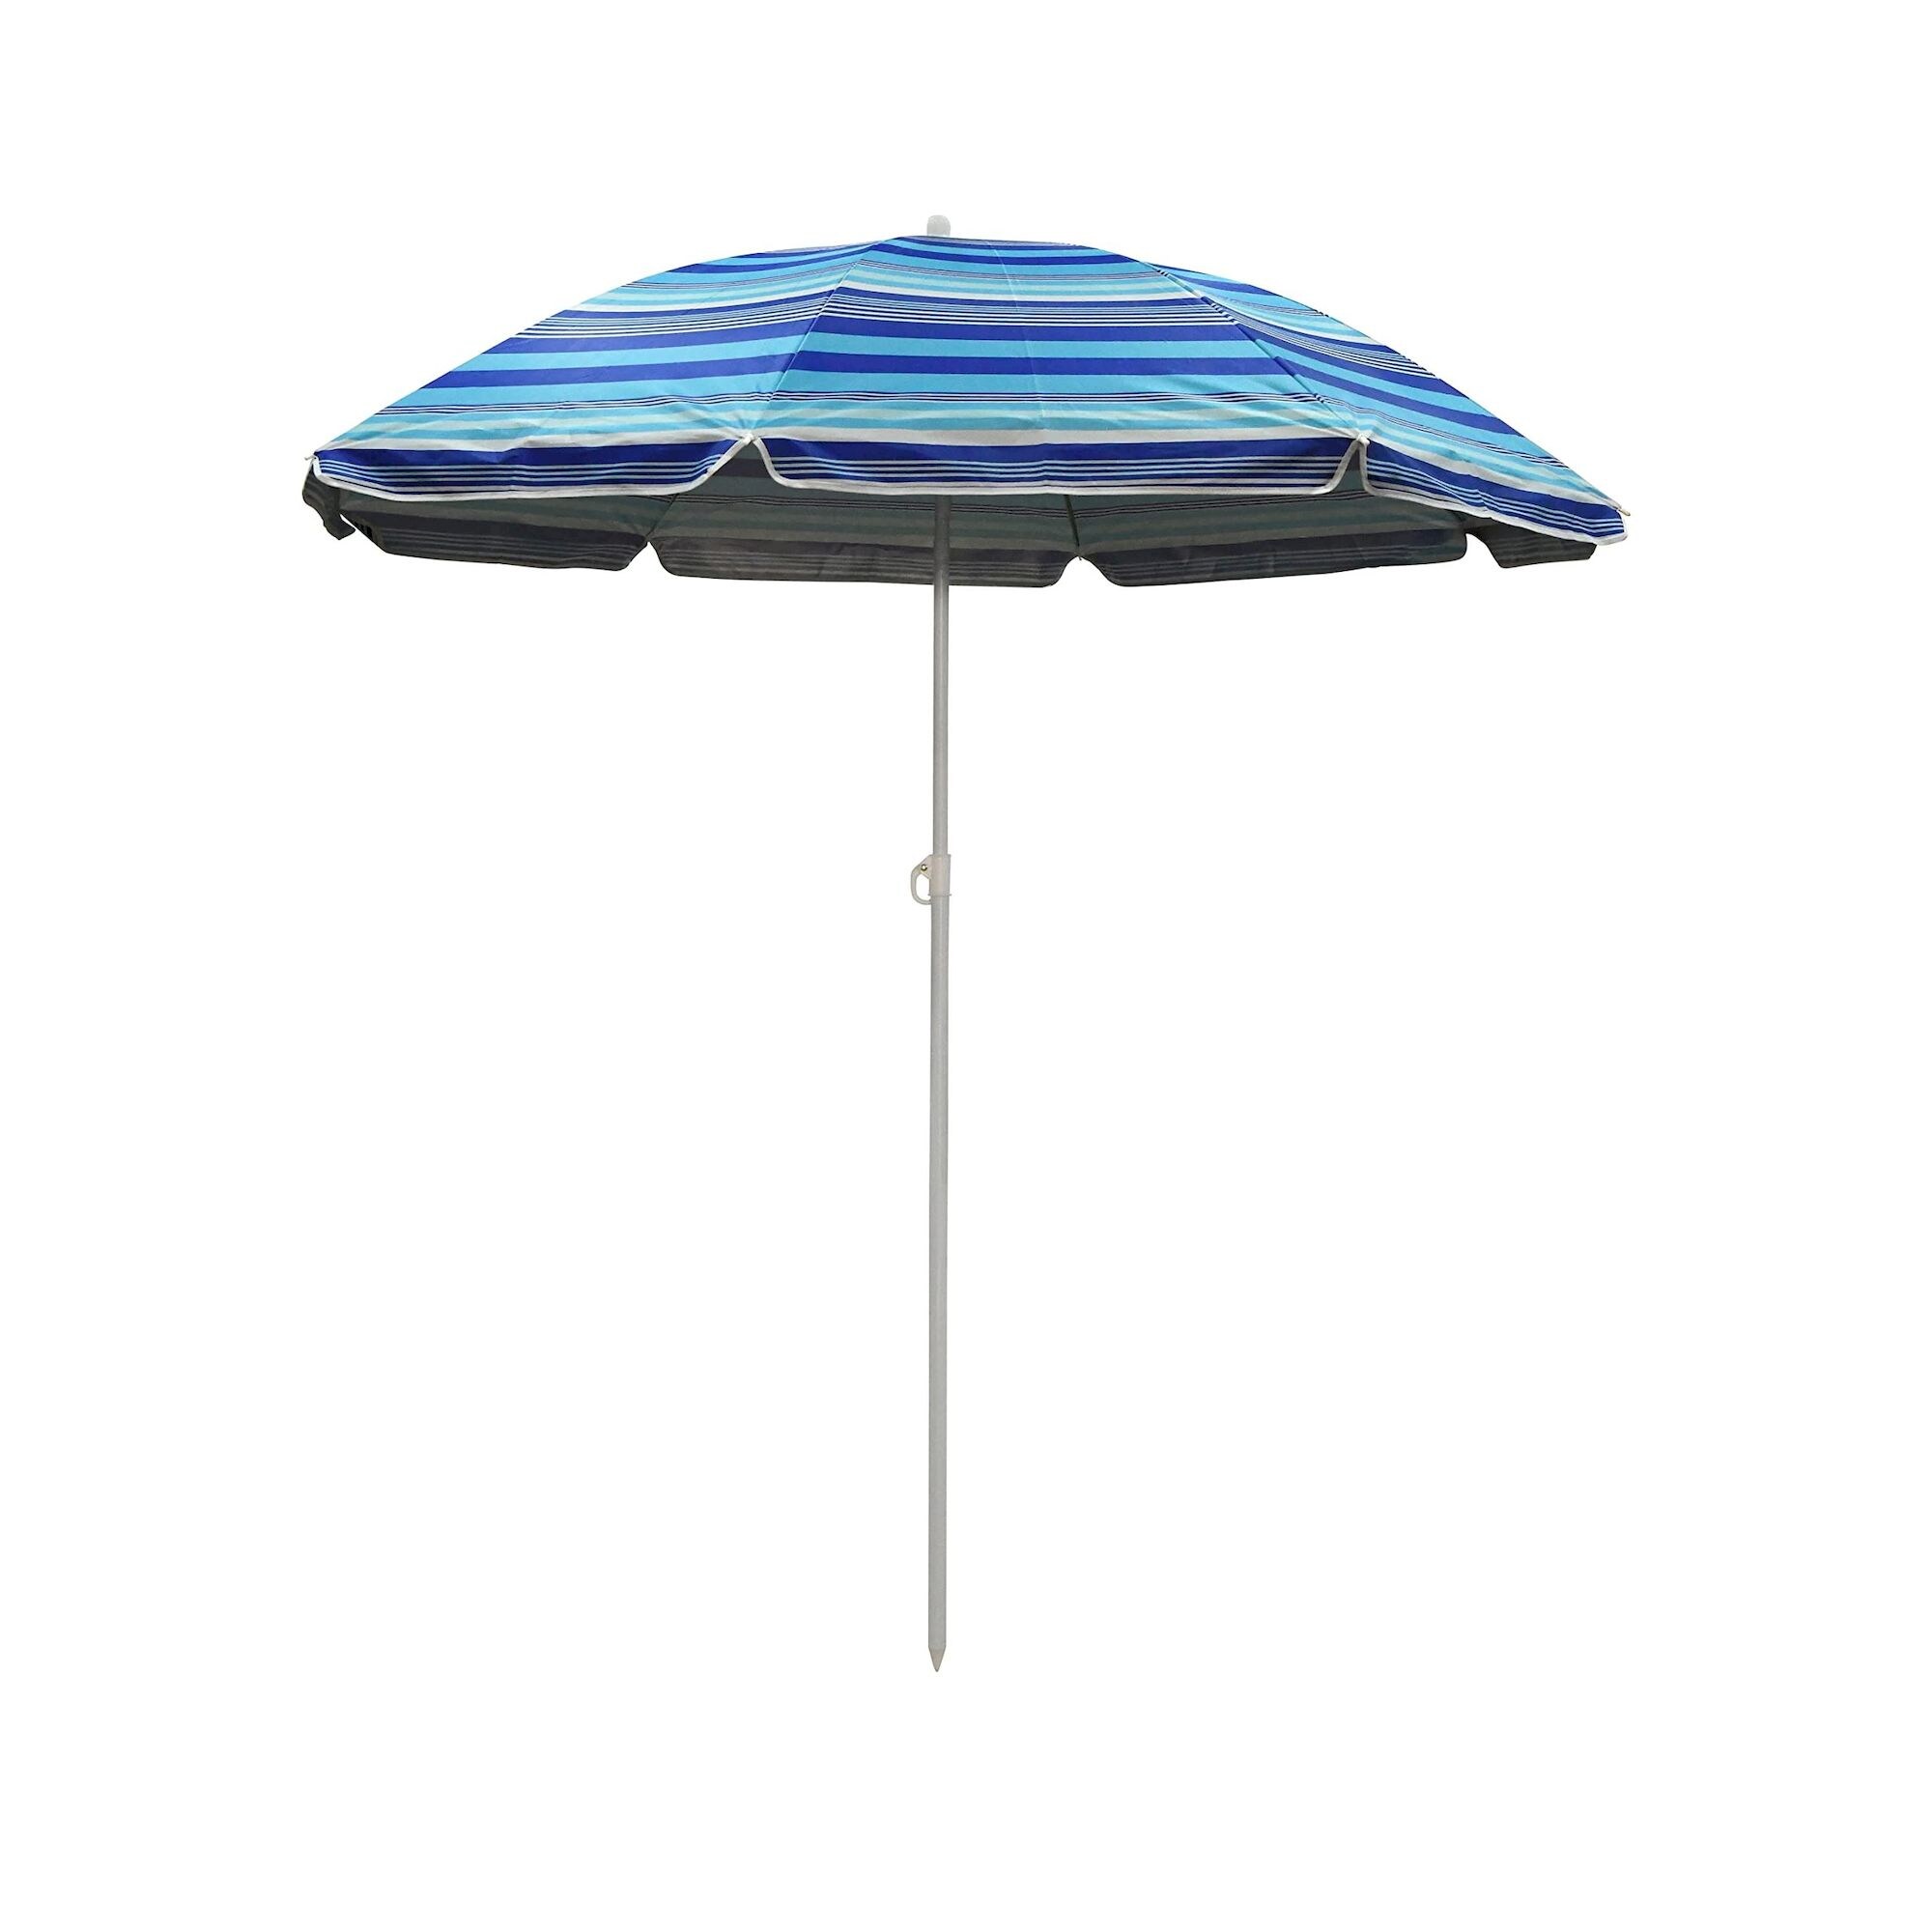 Desert Ranger Portable Sunshade Umbrella with Carry Bag, 2M